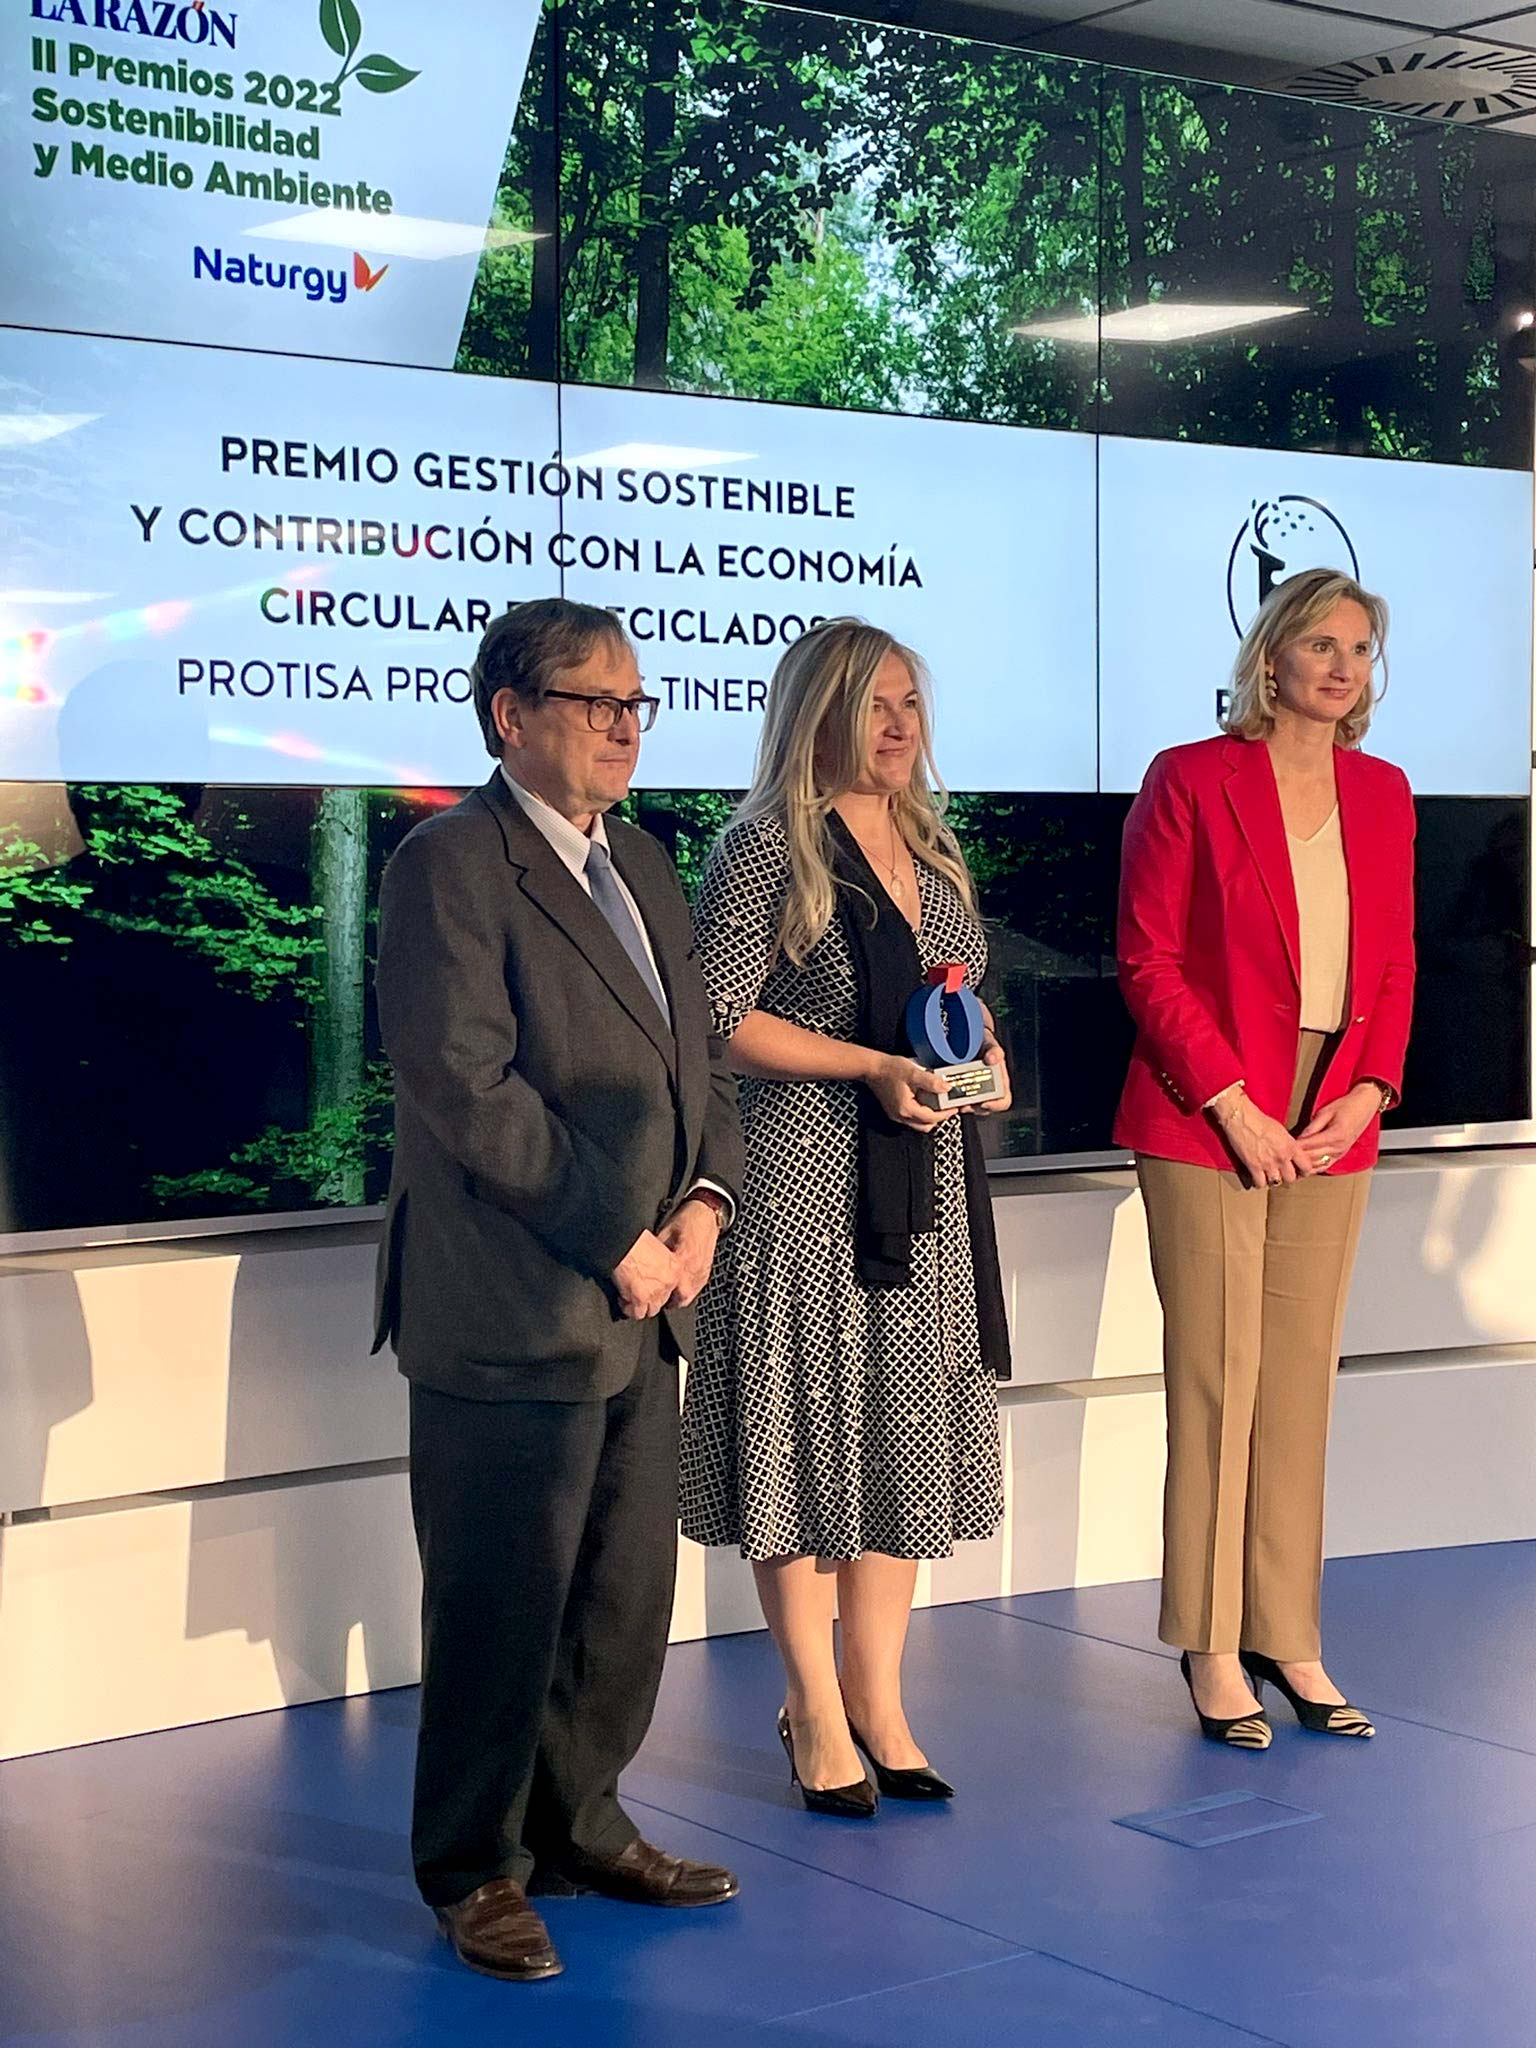 PROTISA awarded at the 2nd La Razón Sustainability and Environment Awards